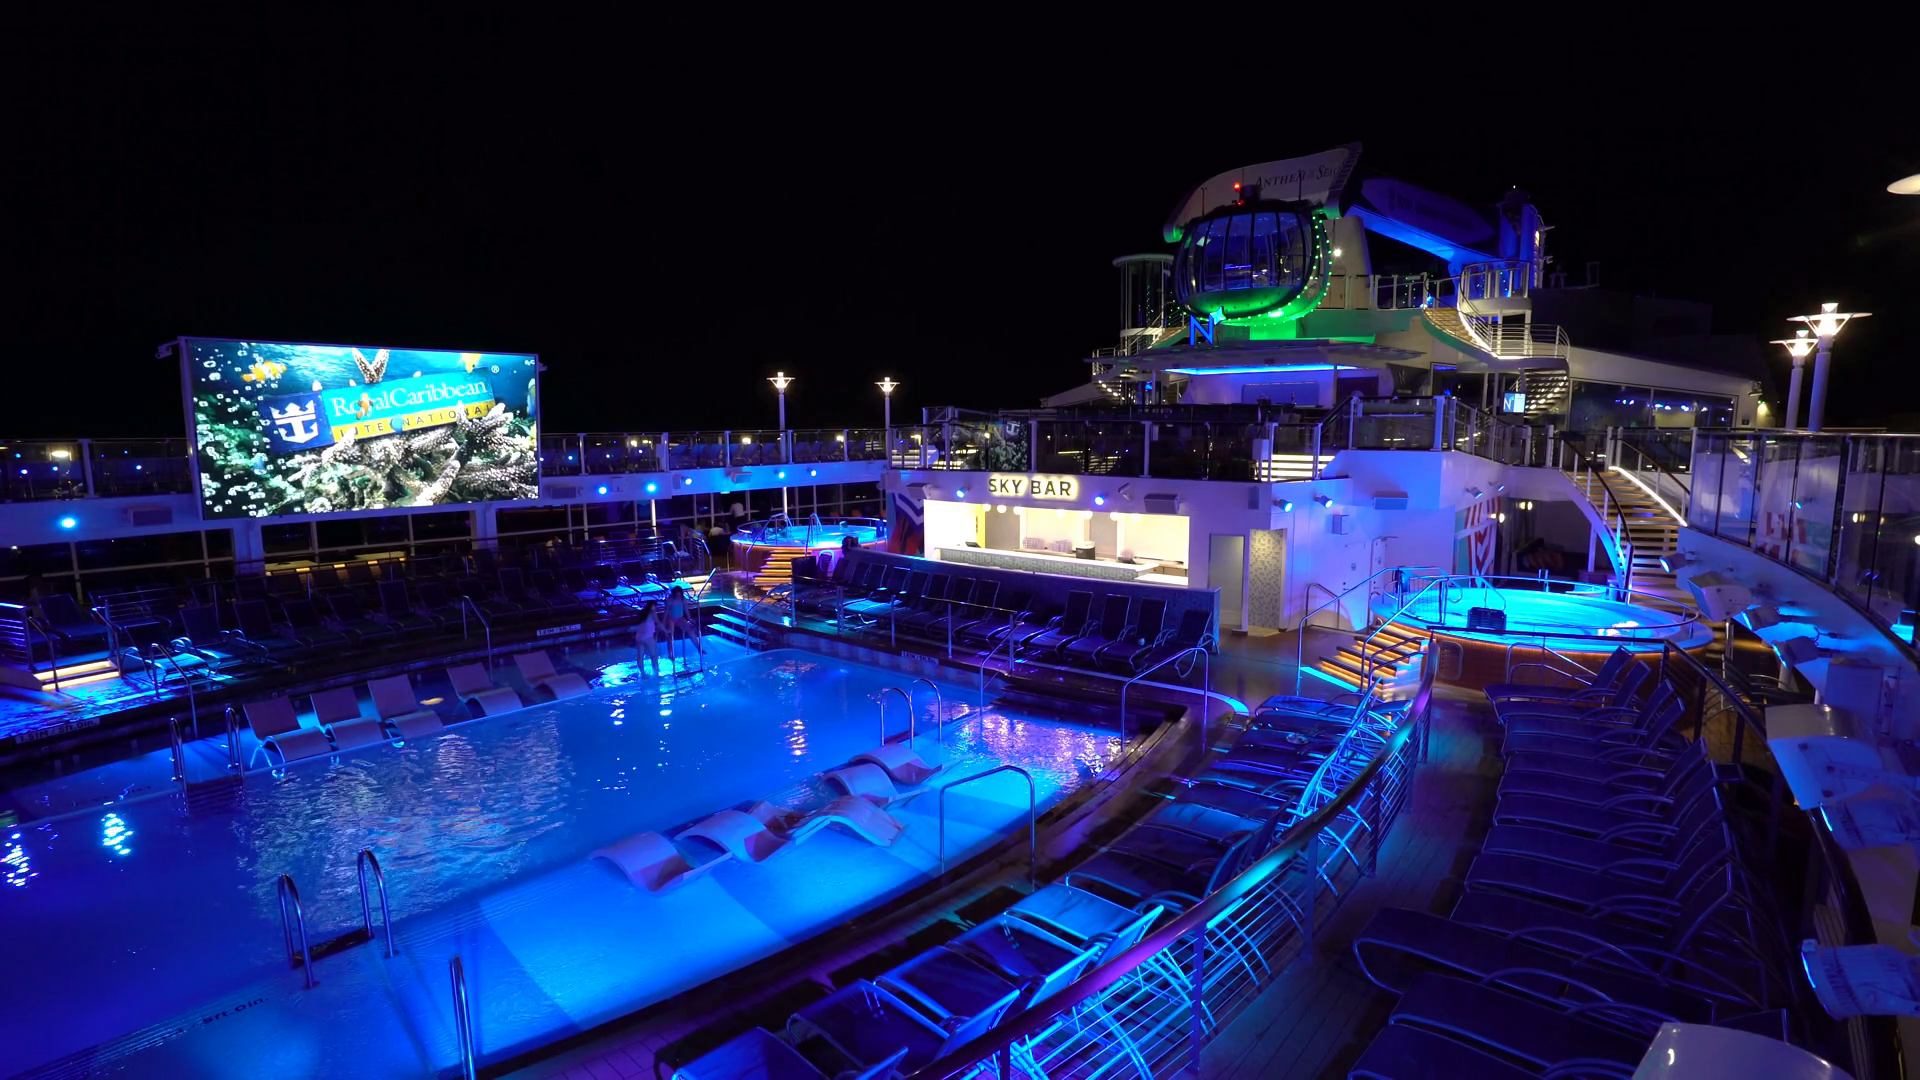 Illuminating cruise ship pool deck at night - Anthem of the seas ...